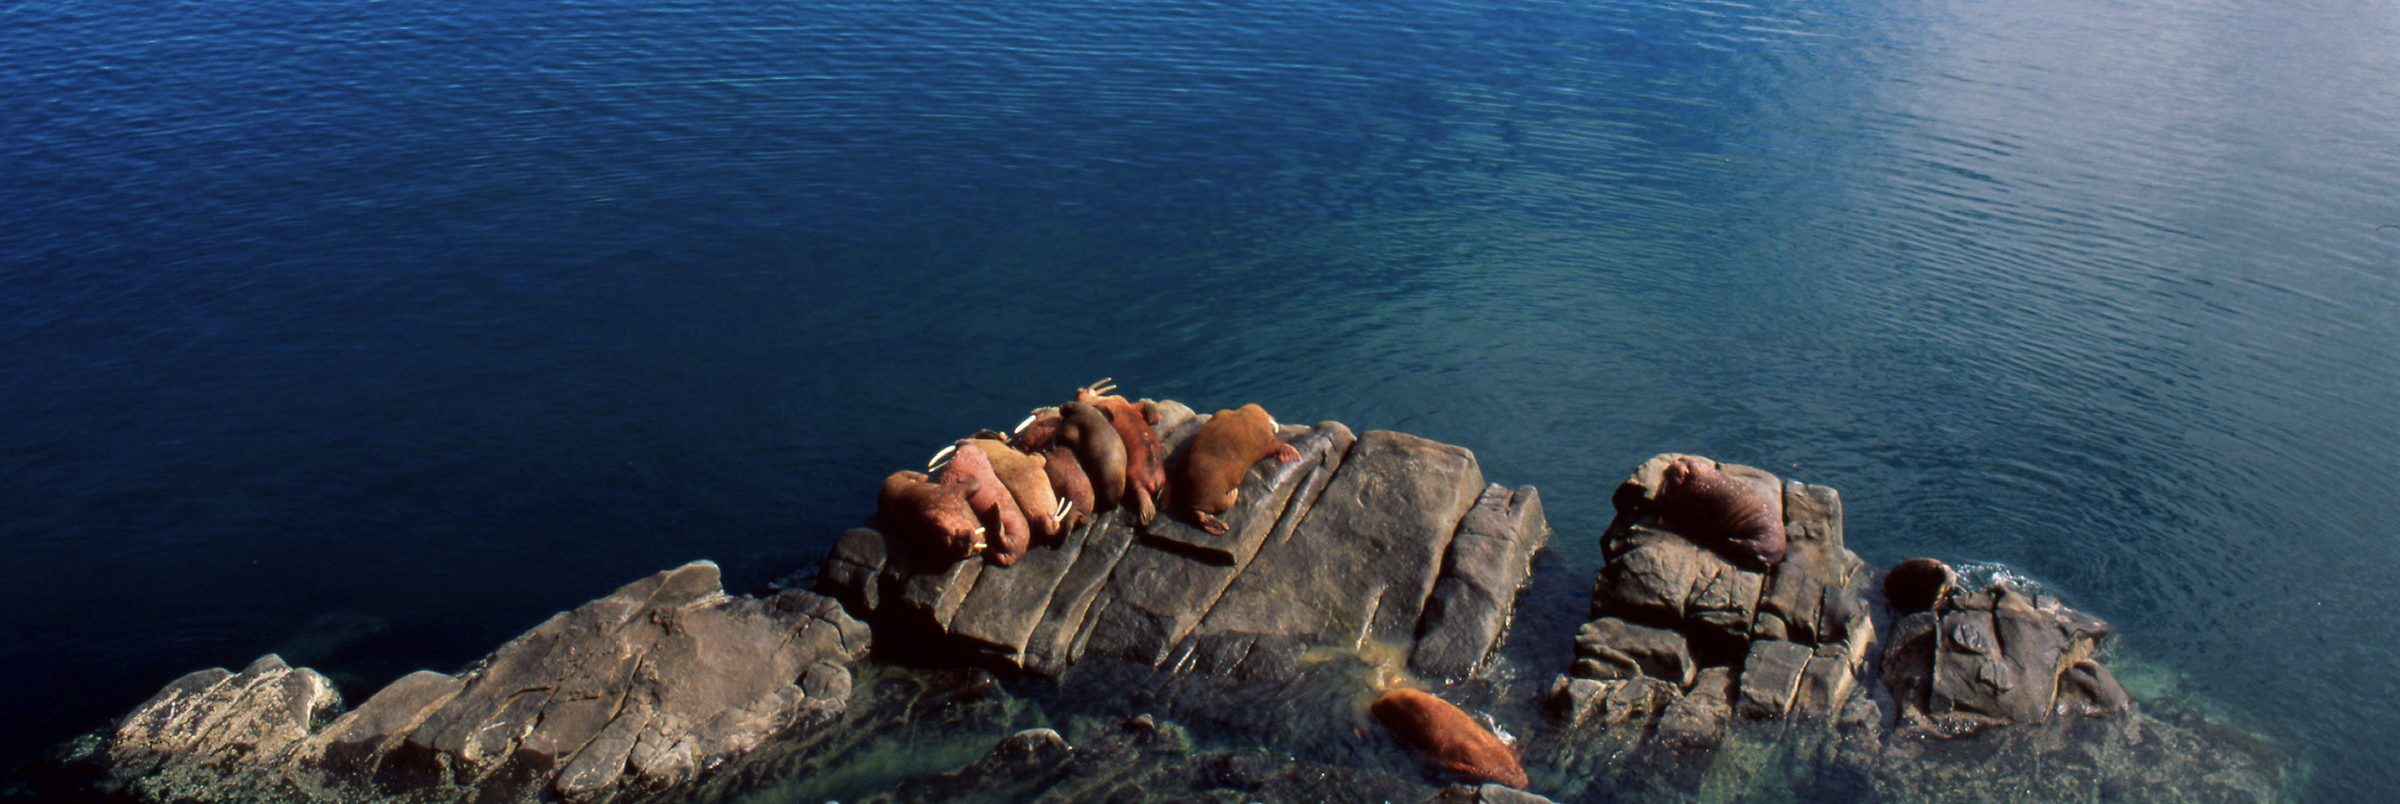 Odobenus rosmarus divergens Pacific walrus Males at "haul-out" Round Island, Alaska, United States of America